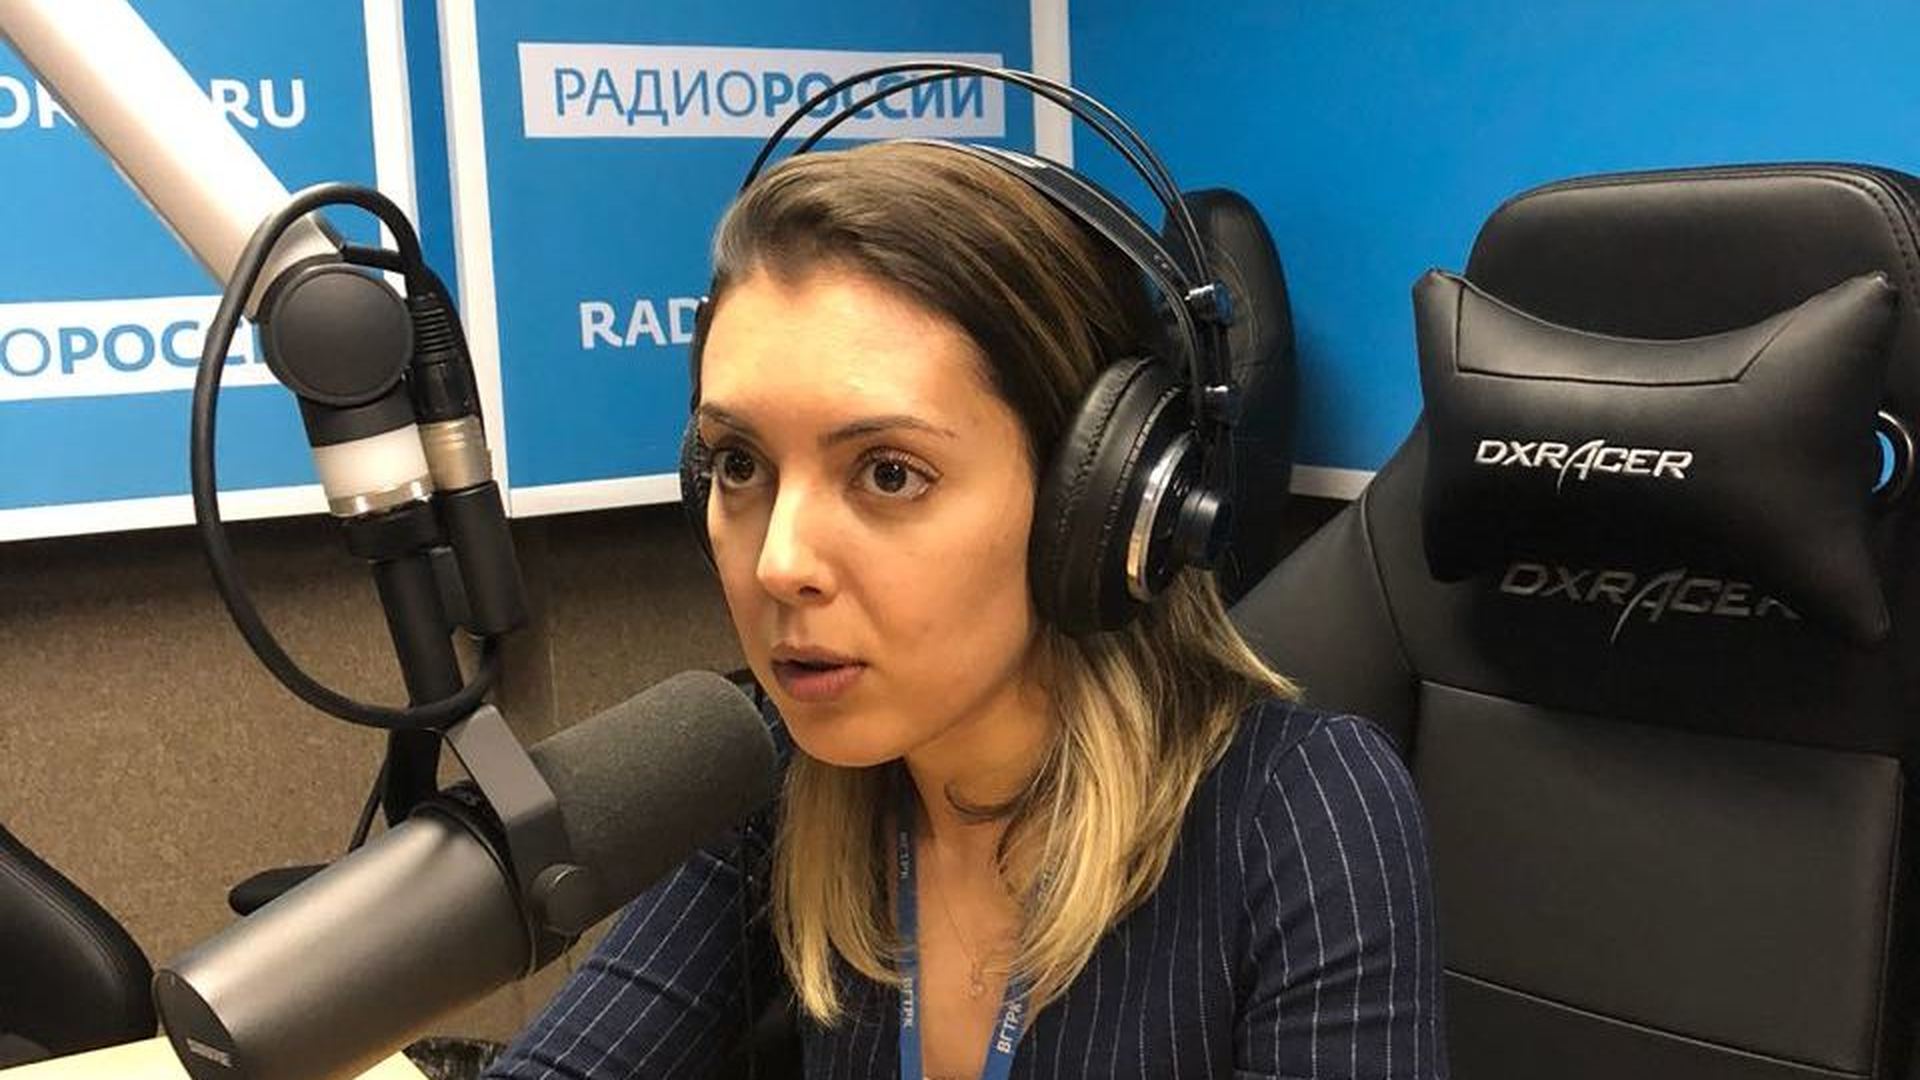 валентина веретенникова радио россии фото